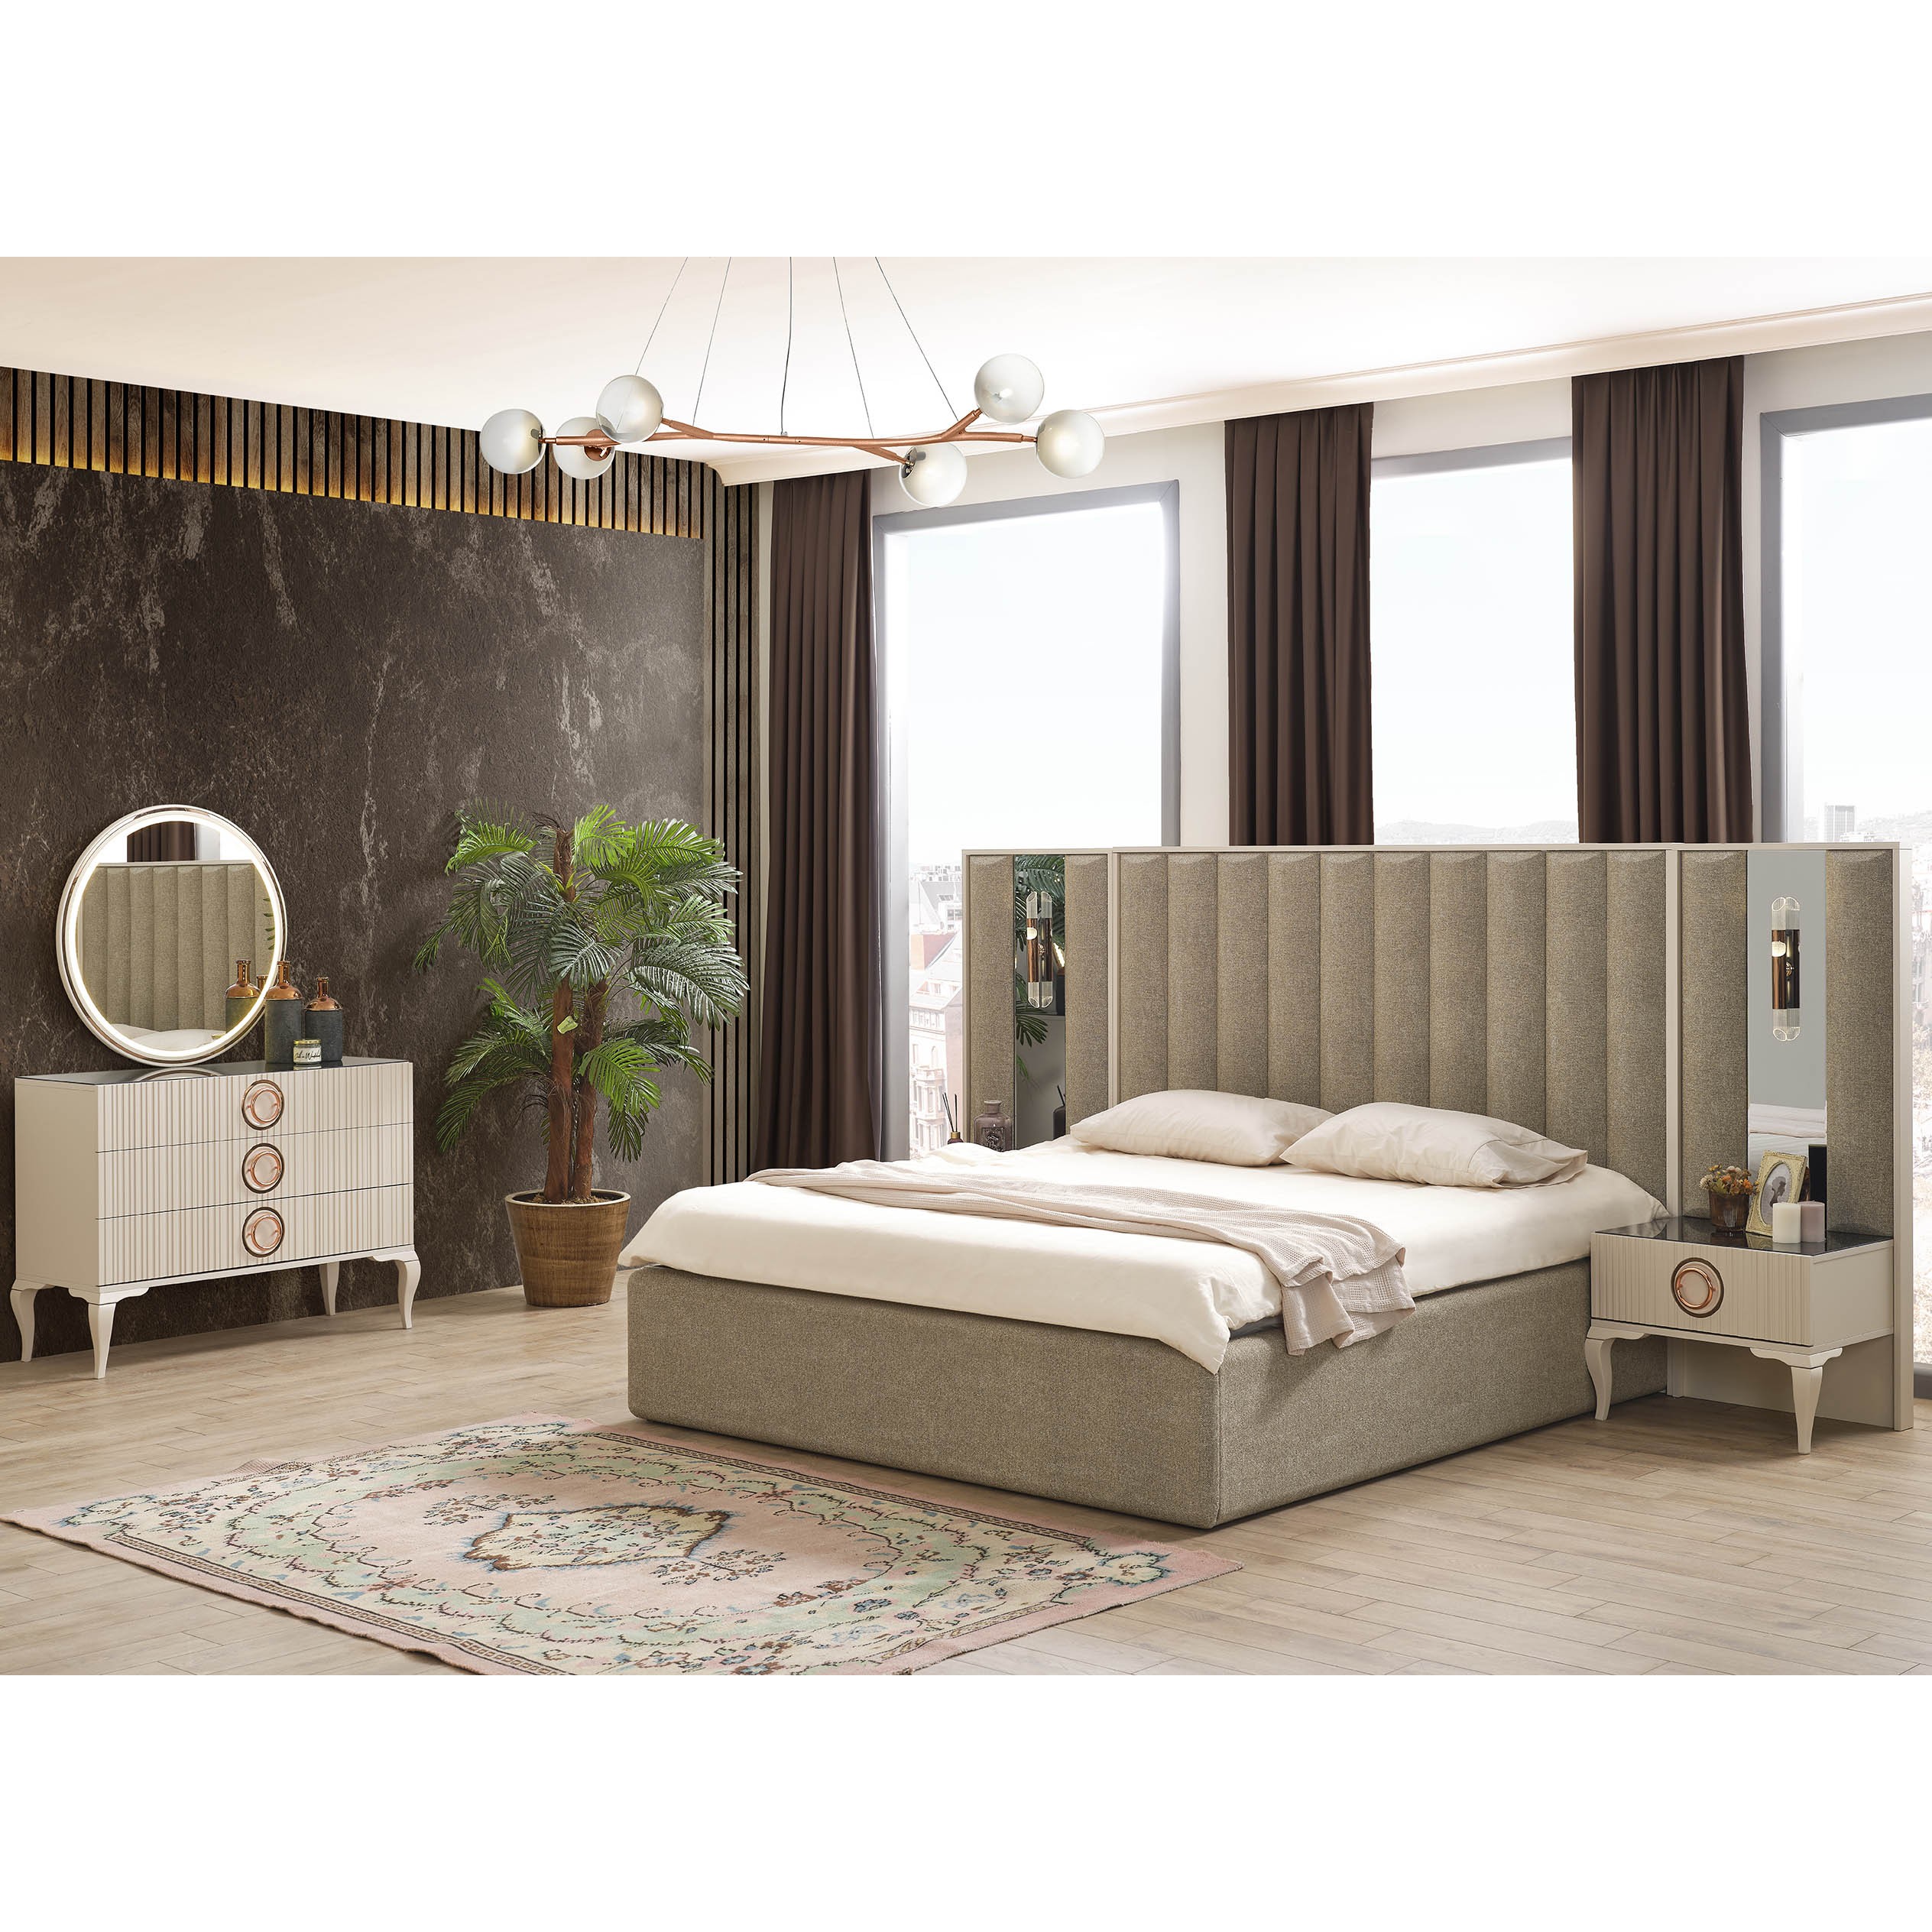 Style Larissa Vol1 Bed With Storage 180x200 cm